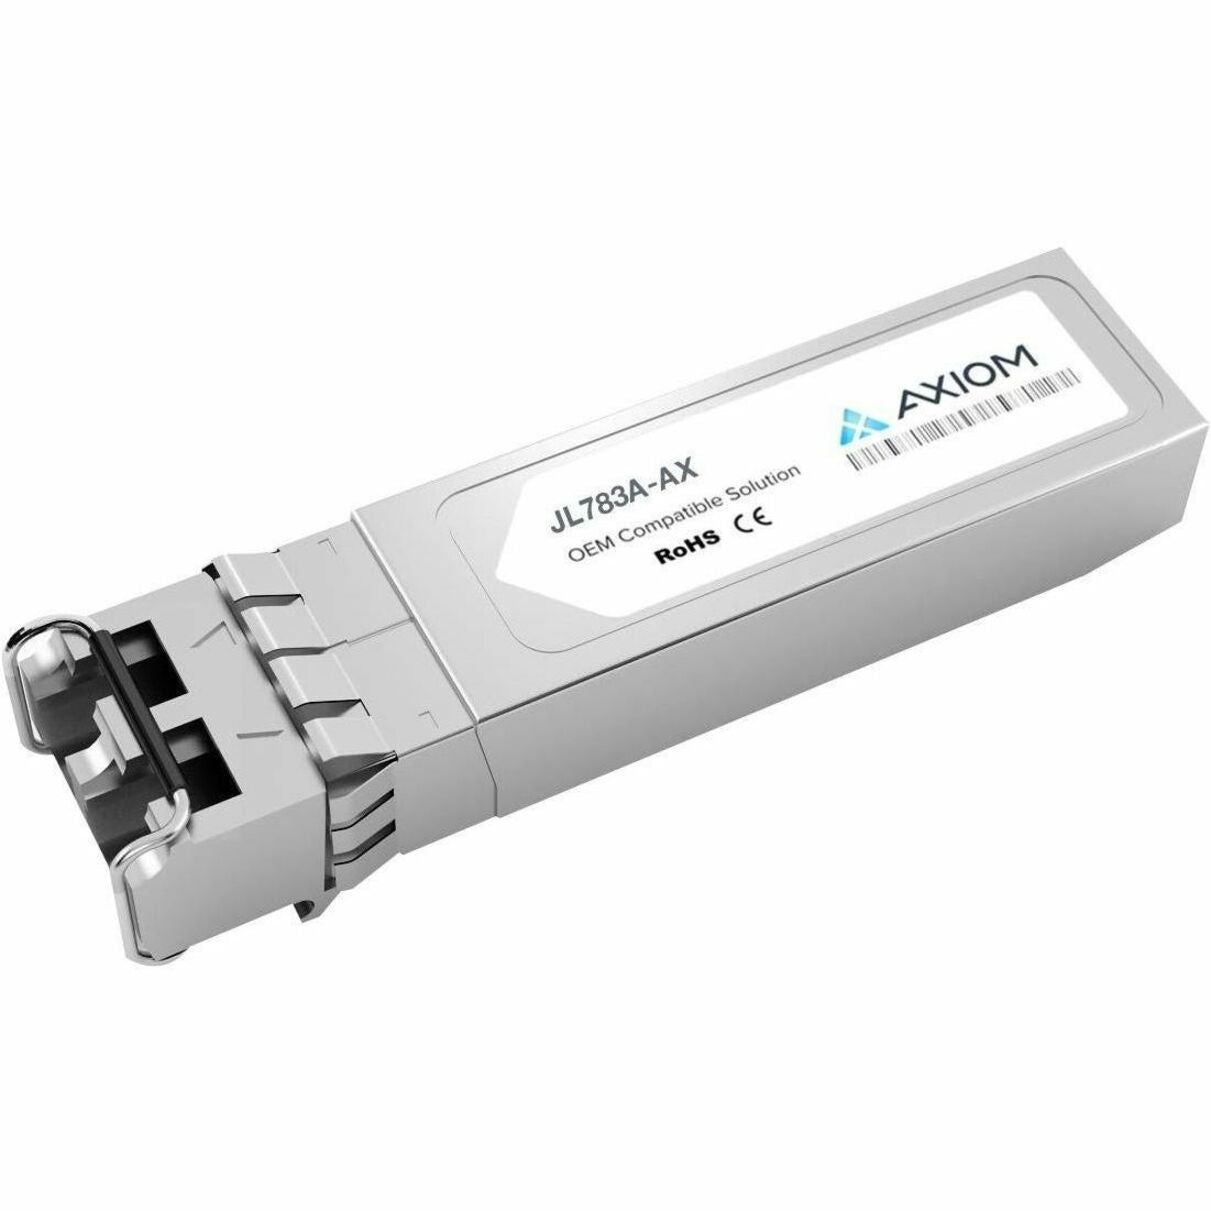 Axiom JL783A-AX 10GBASE-LR Industrial Temp SFP+ Transceiver for Aruba, Lifetime Warranty, RoHS Certified